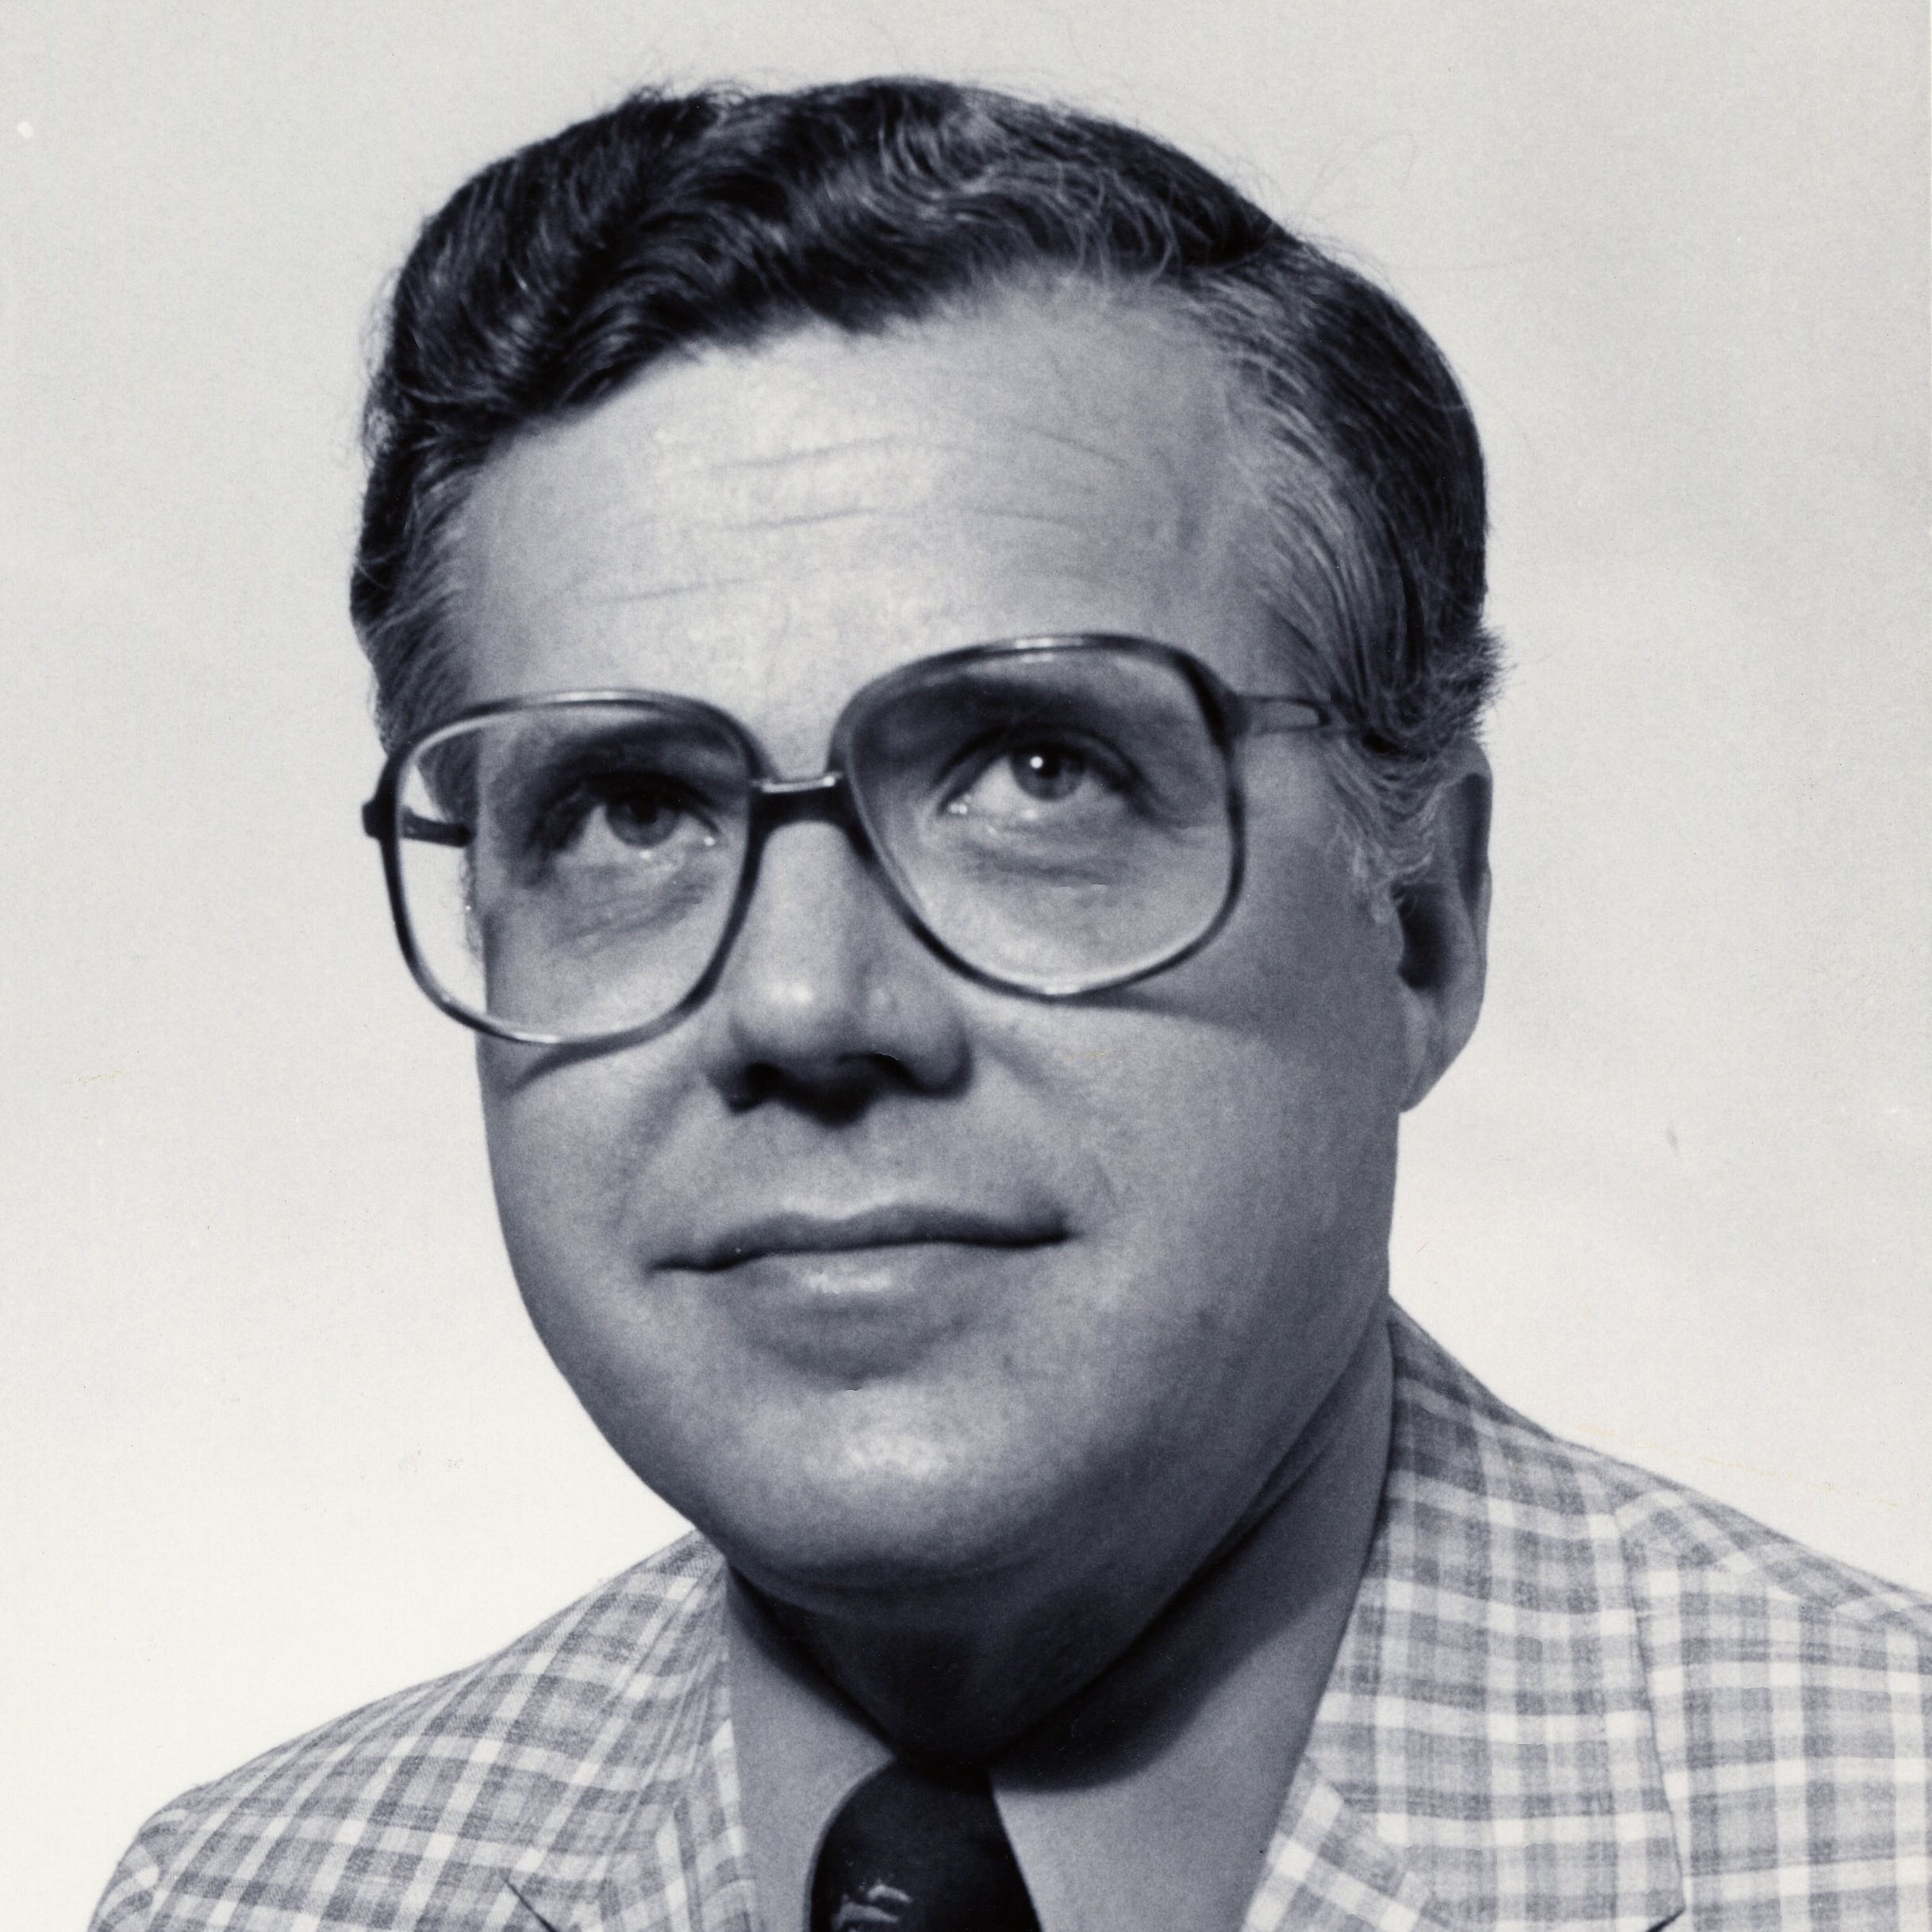 Professional photo of  Paul Parkman wearing glasses and a plaid suit